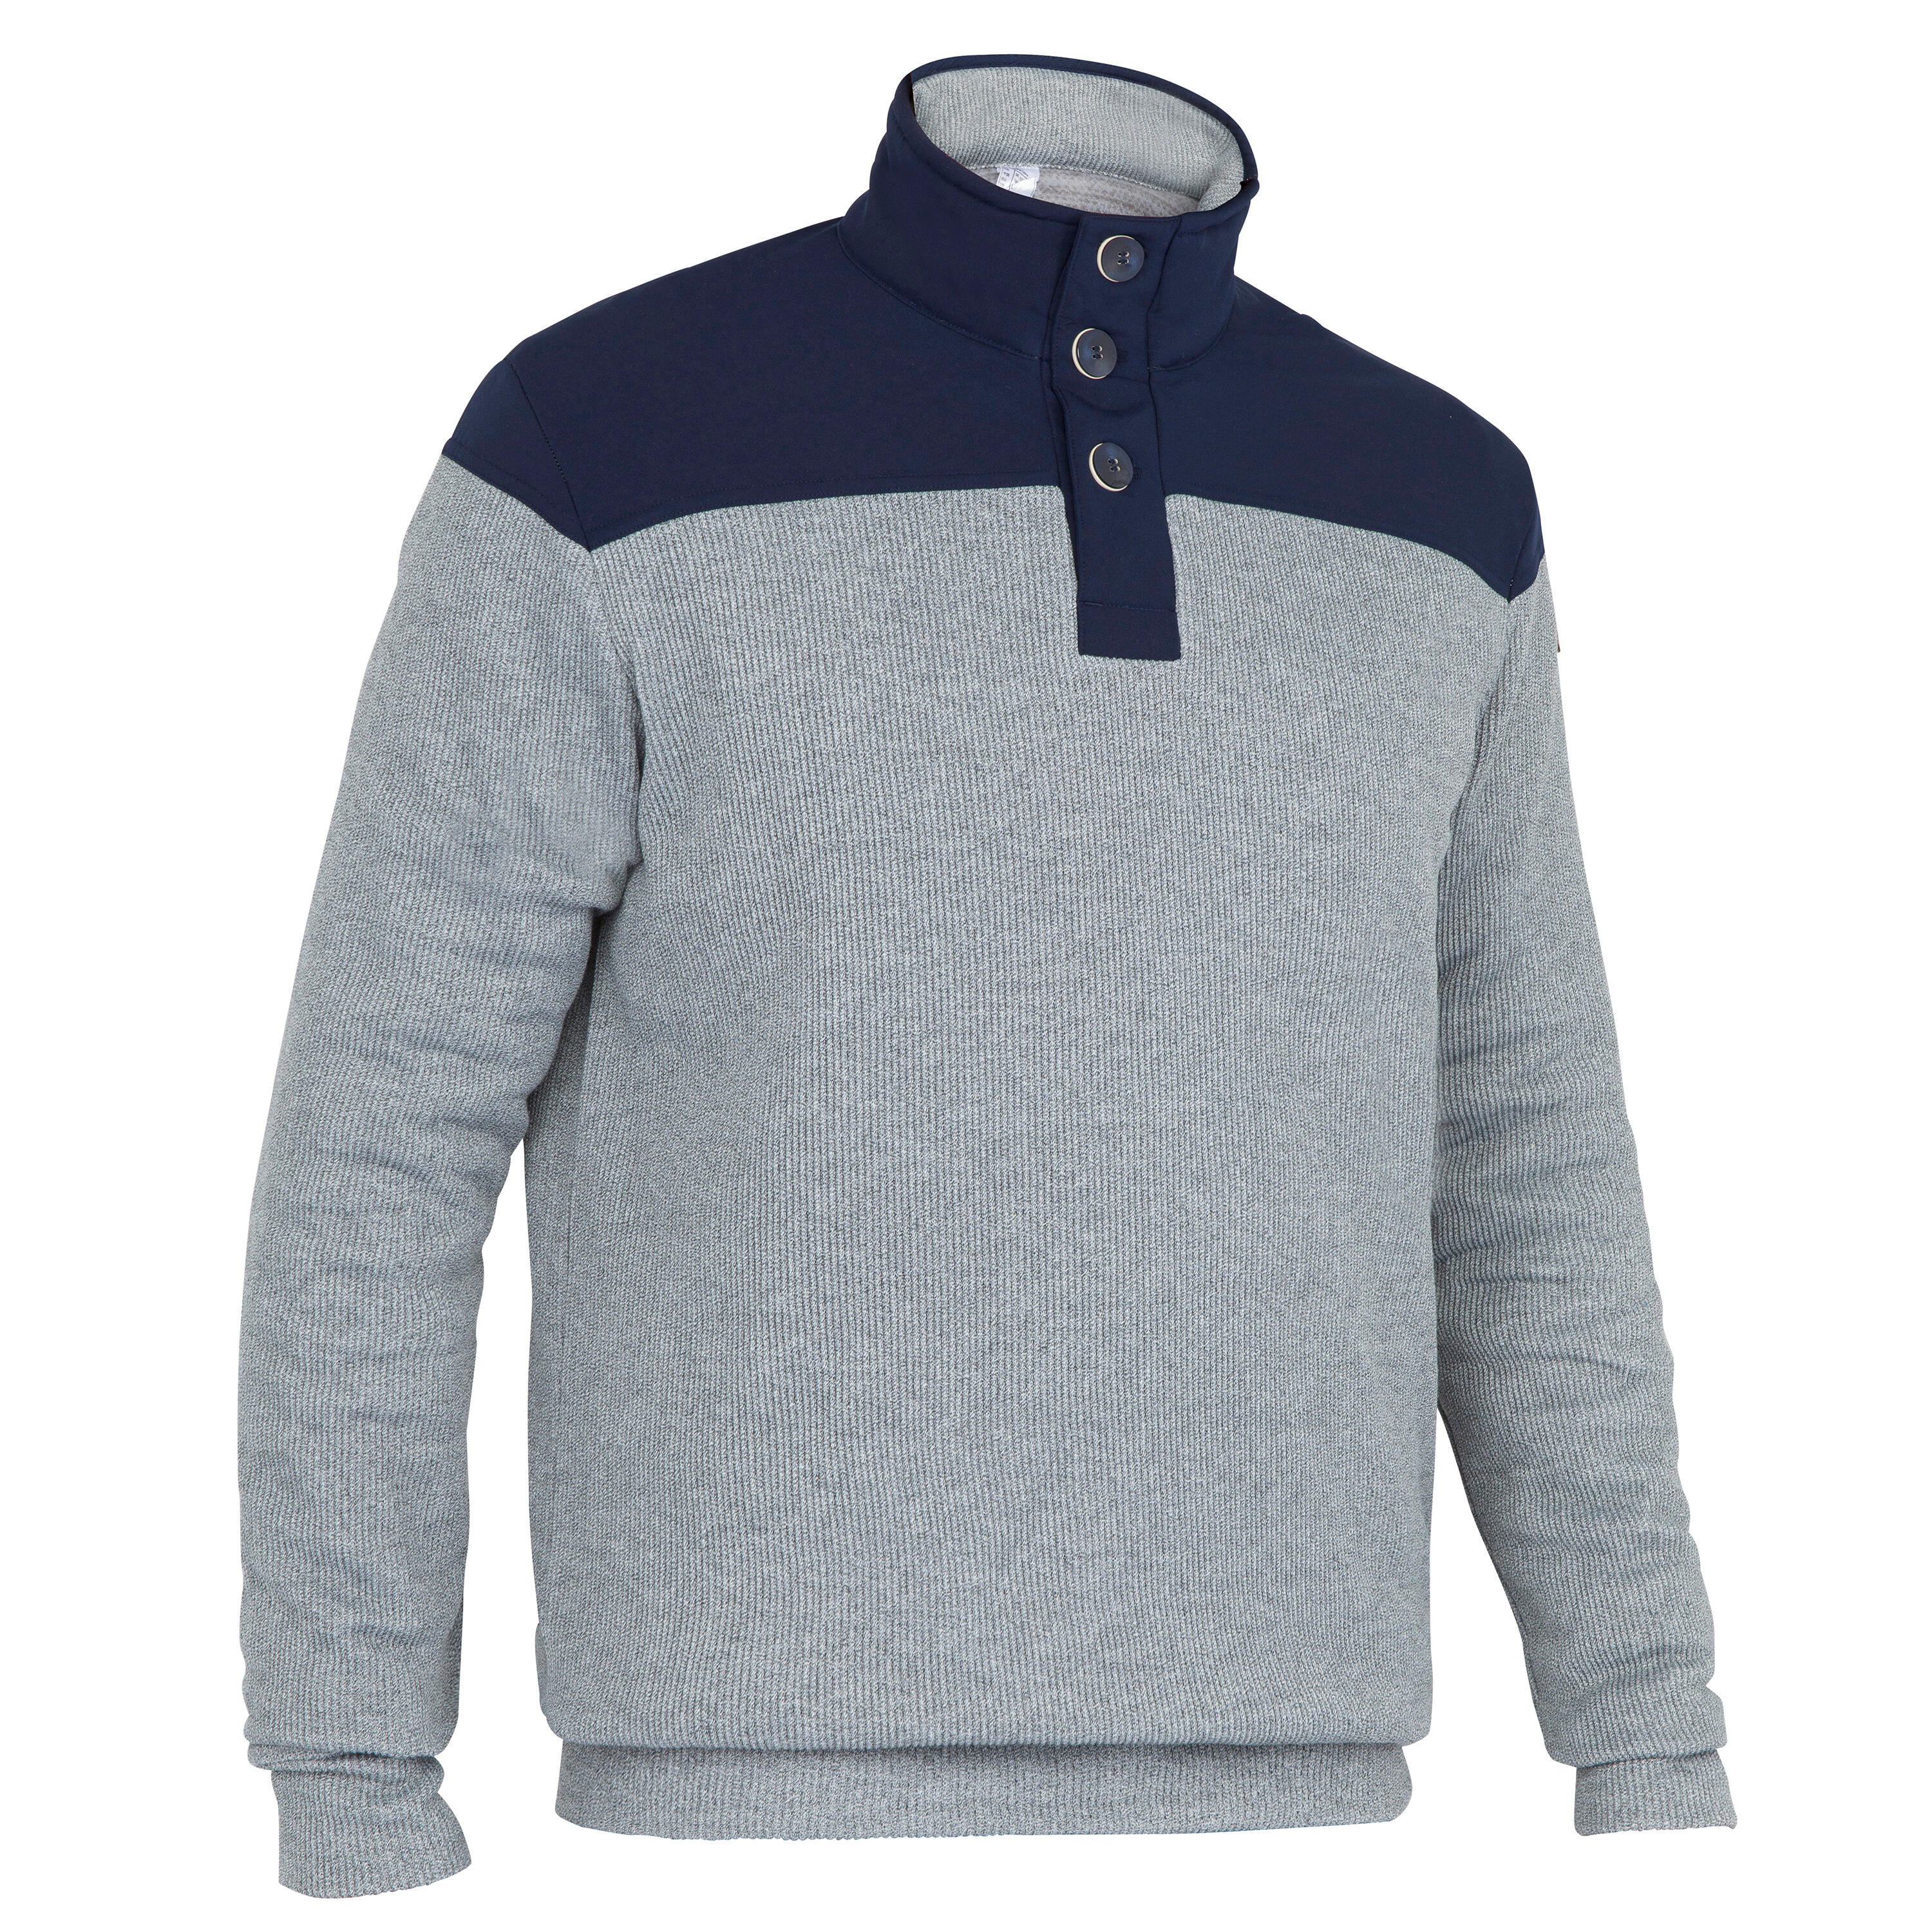 Мужской свитер Sailing 300 синий/серый TRIBORD, серый/черно-синий